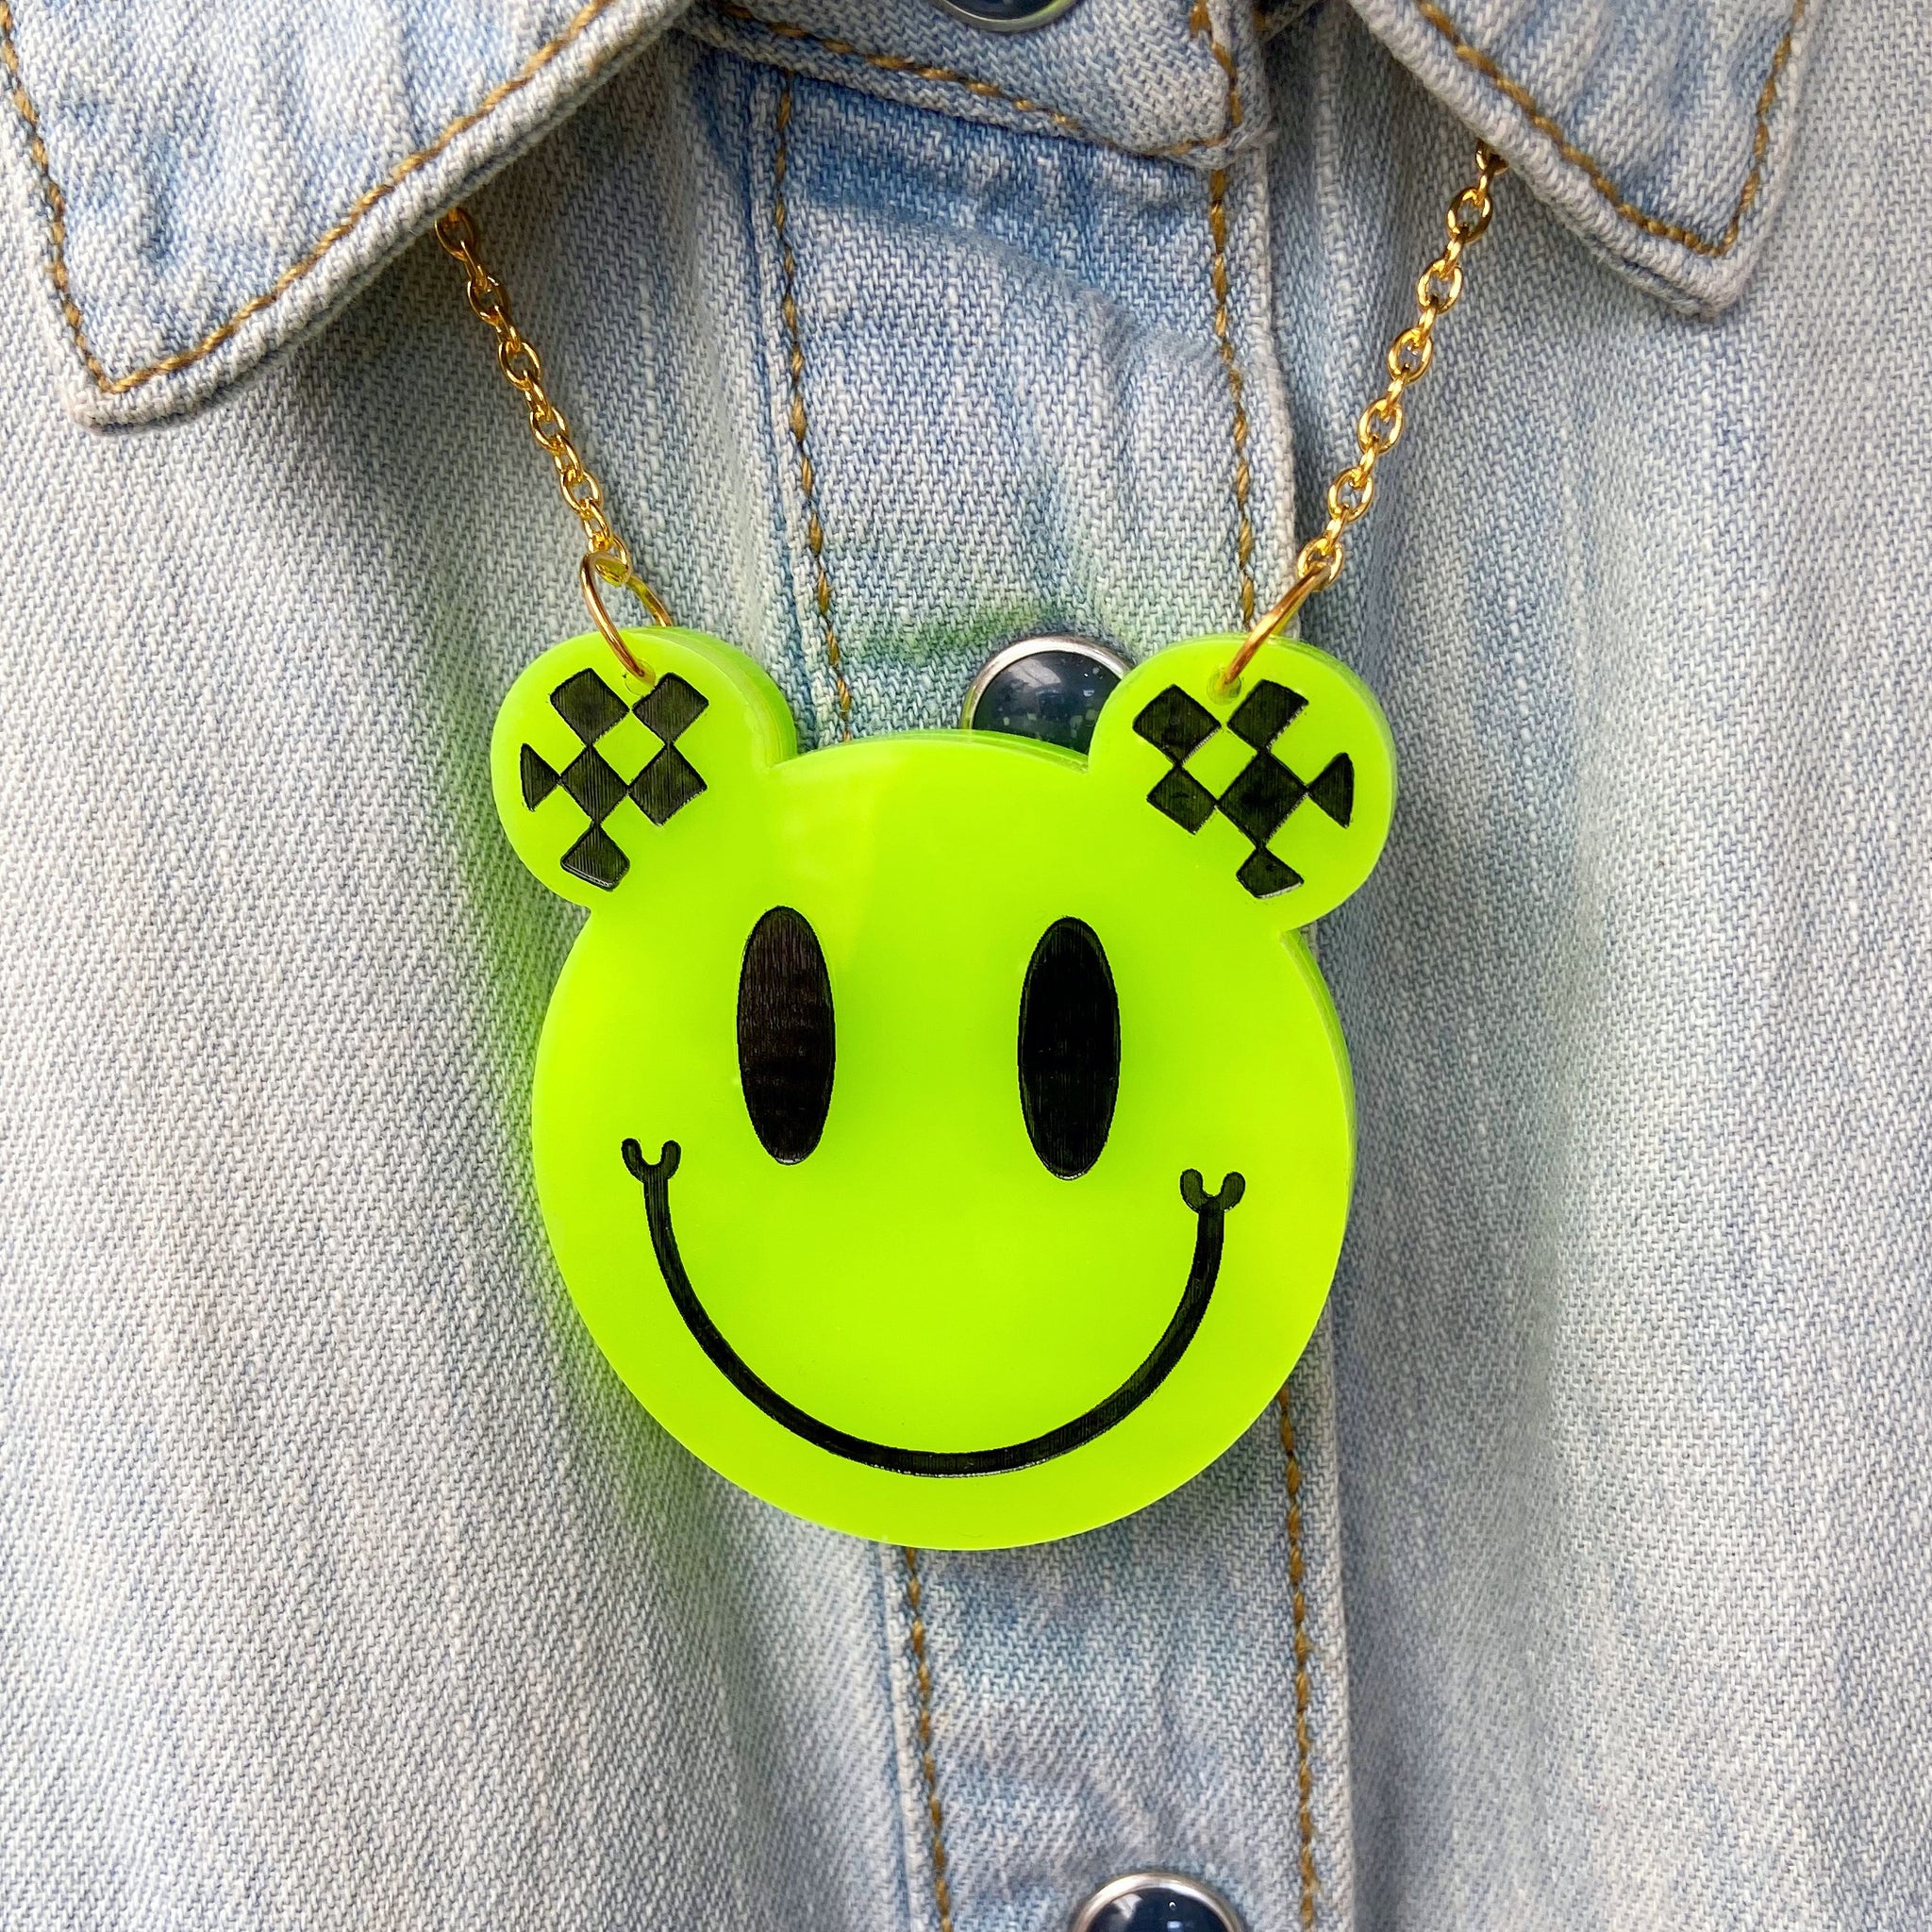 Smiley Face Acrylic Necklace (Neon Yellow)